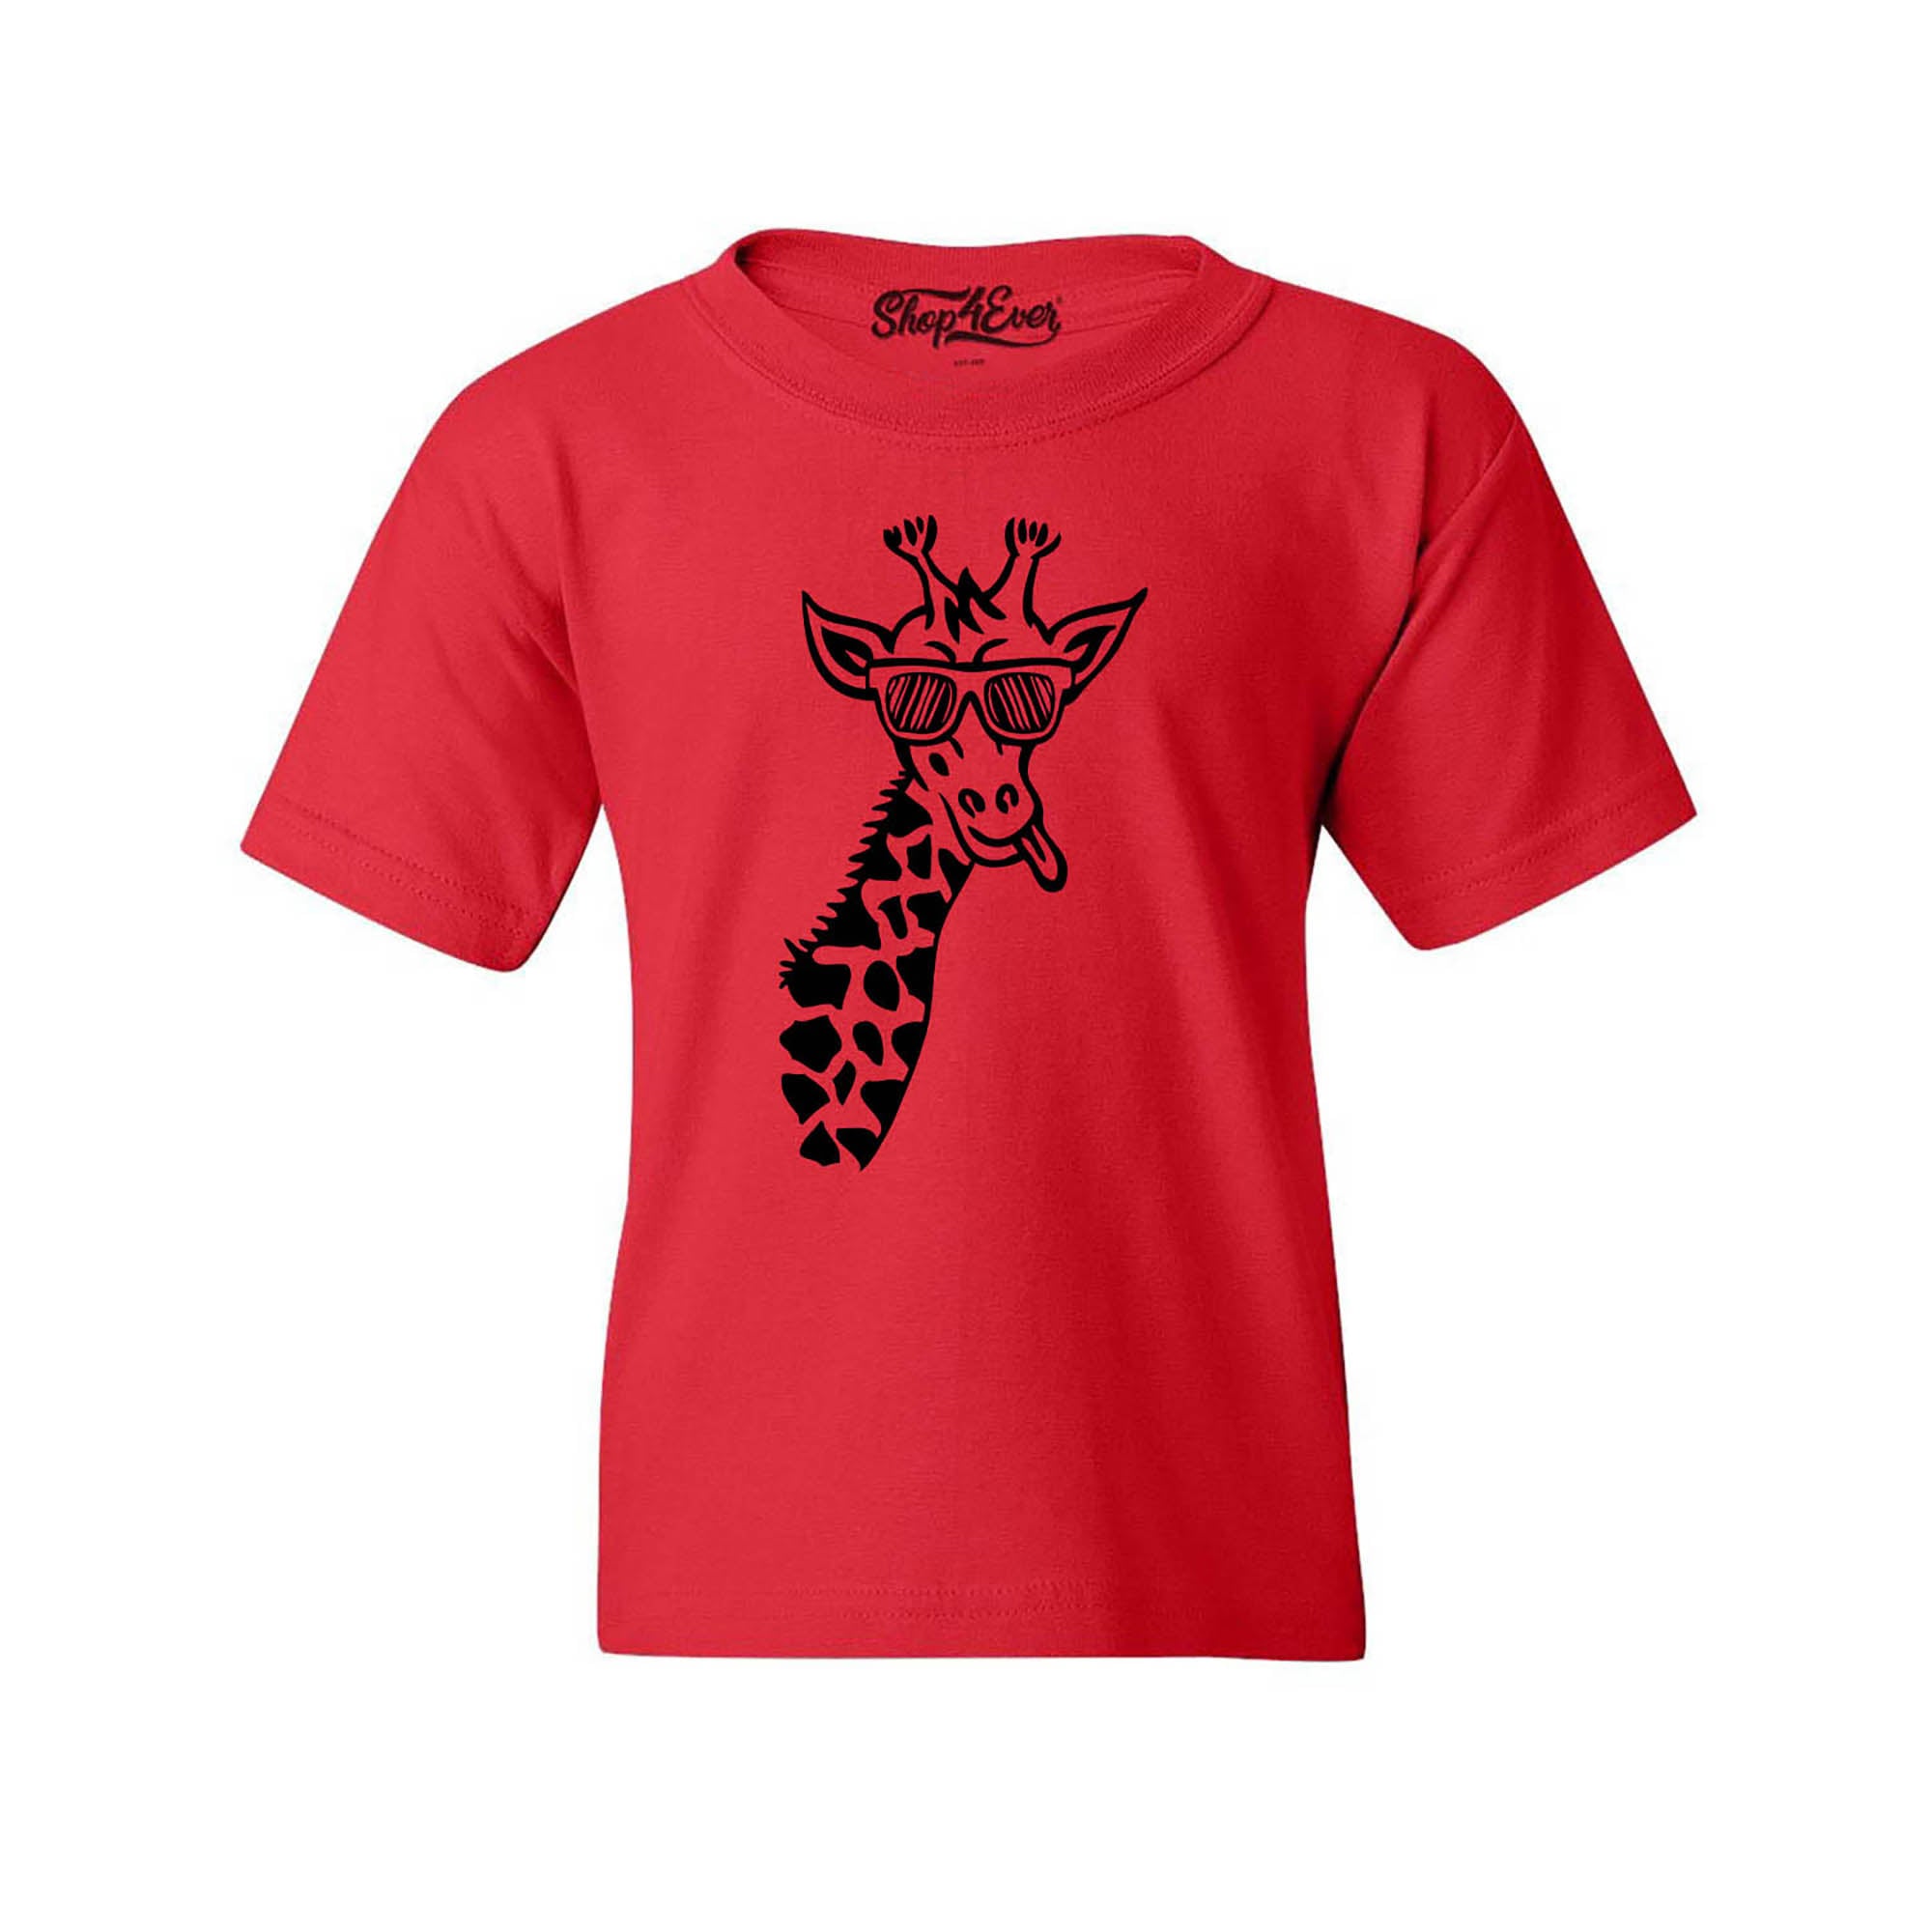 Cool Giraffe Cute Animal Youth's T-Shirt